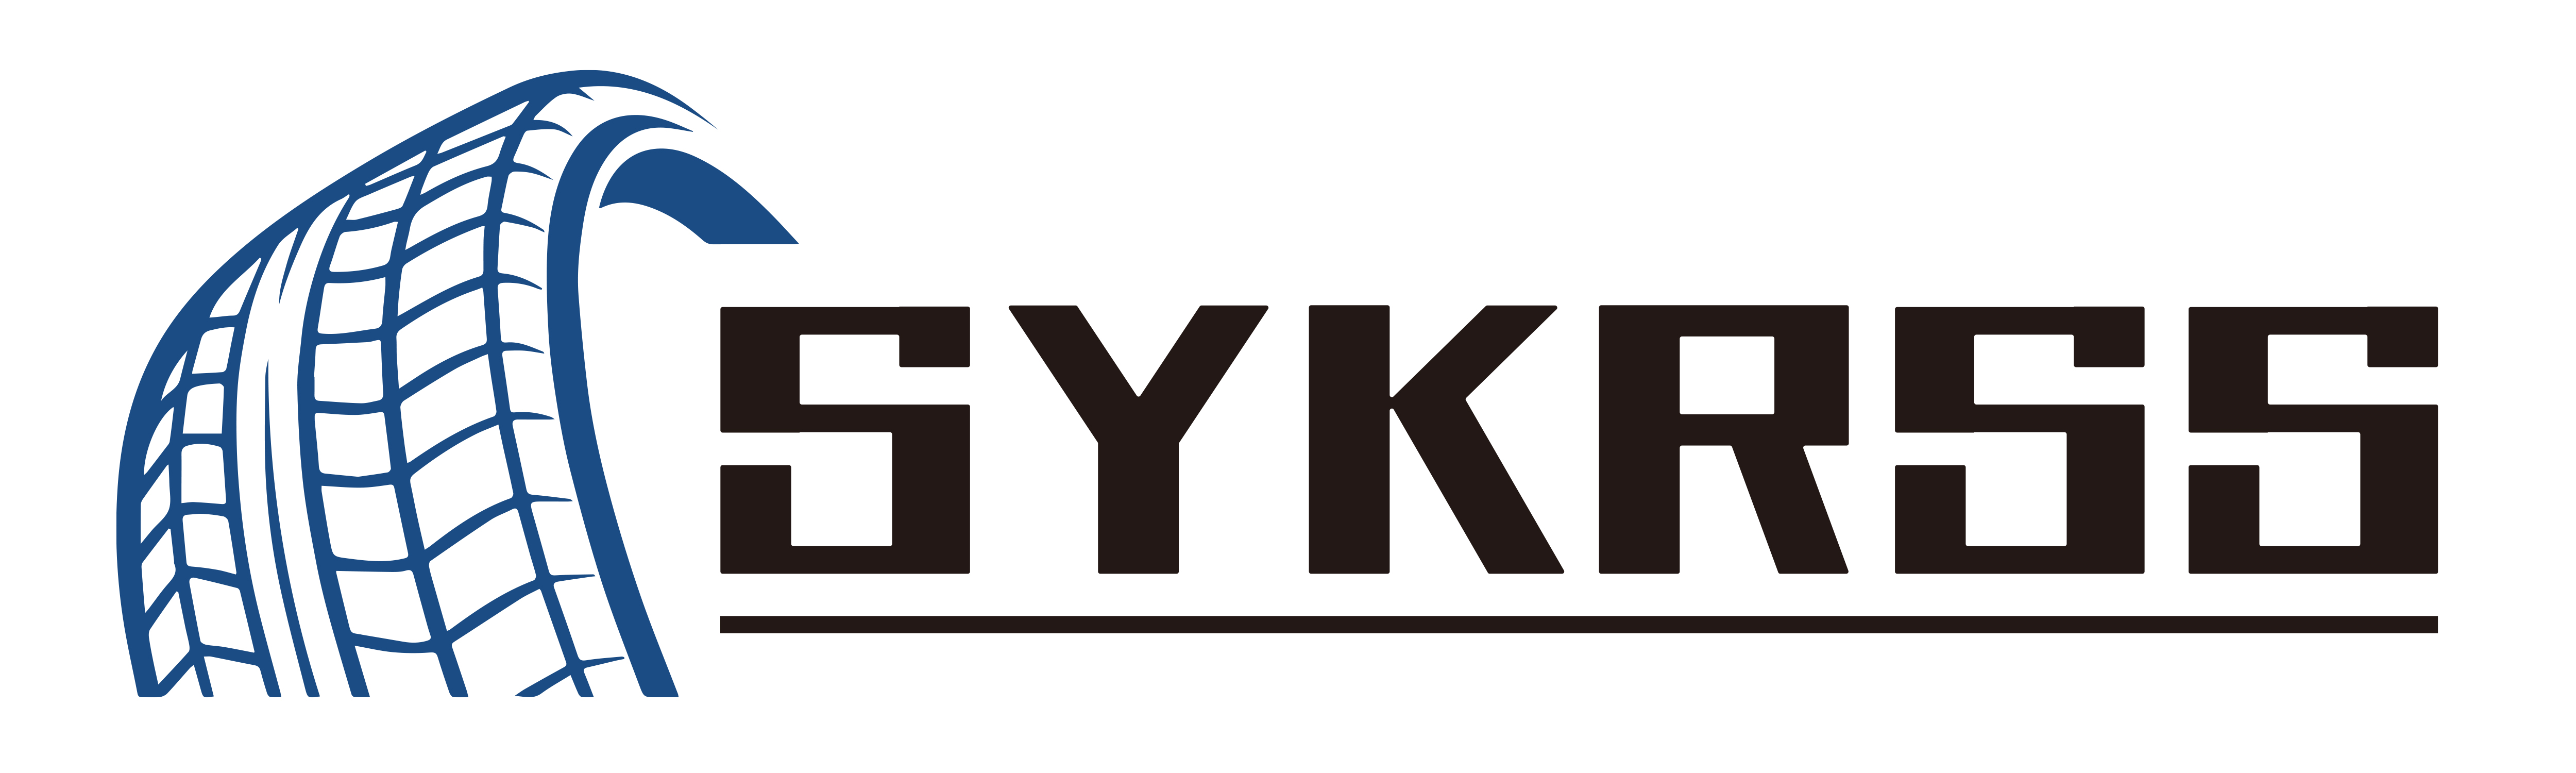 BERKSYDE-2